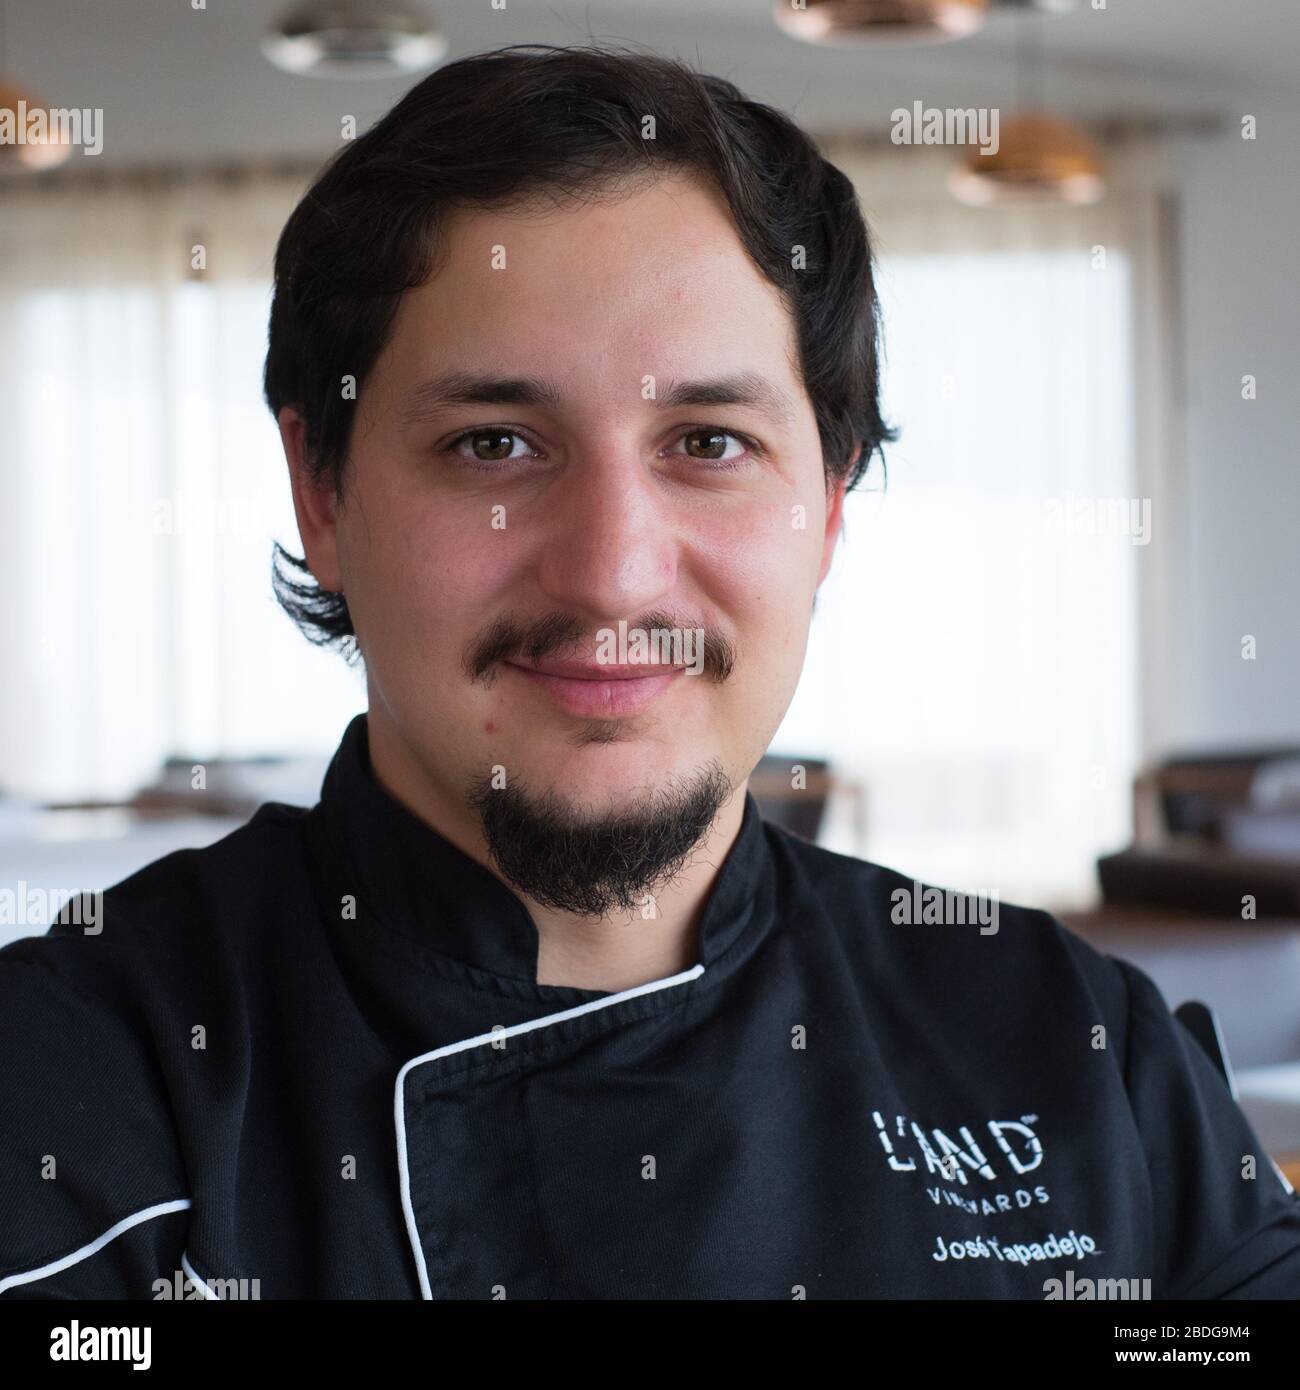 José Tapadejo, executive chef at the restaurant at L'AND Vineyards,  Montemor-o-Novo, Alentejo, Portugal Stock Photo - Alamy